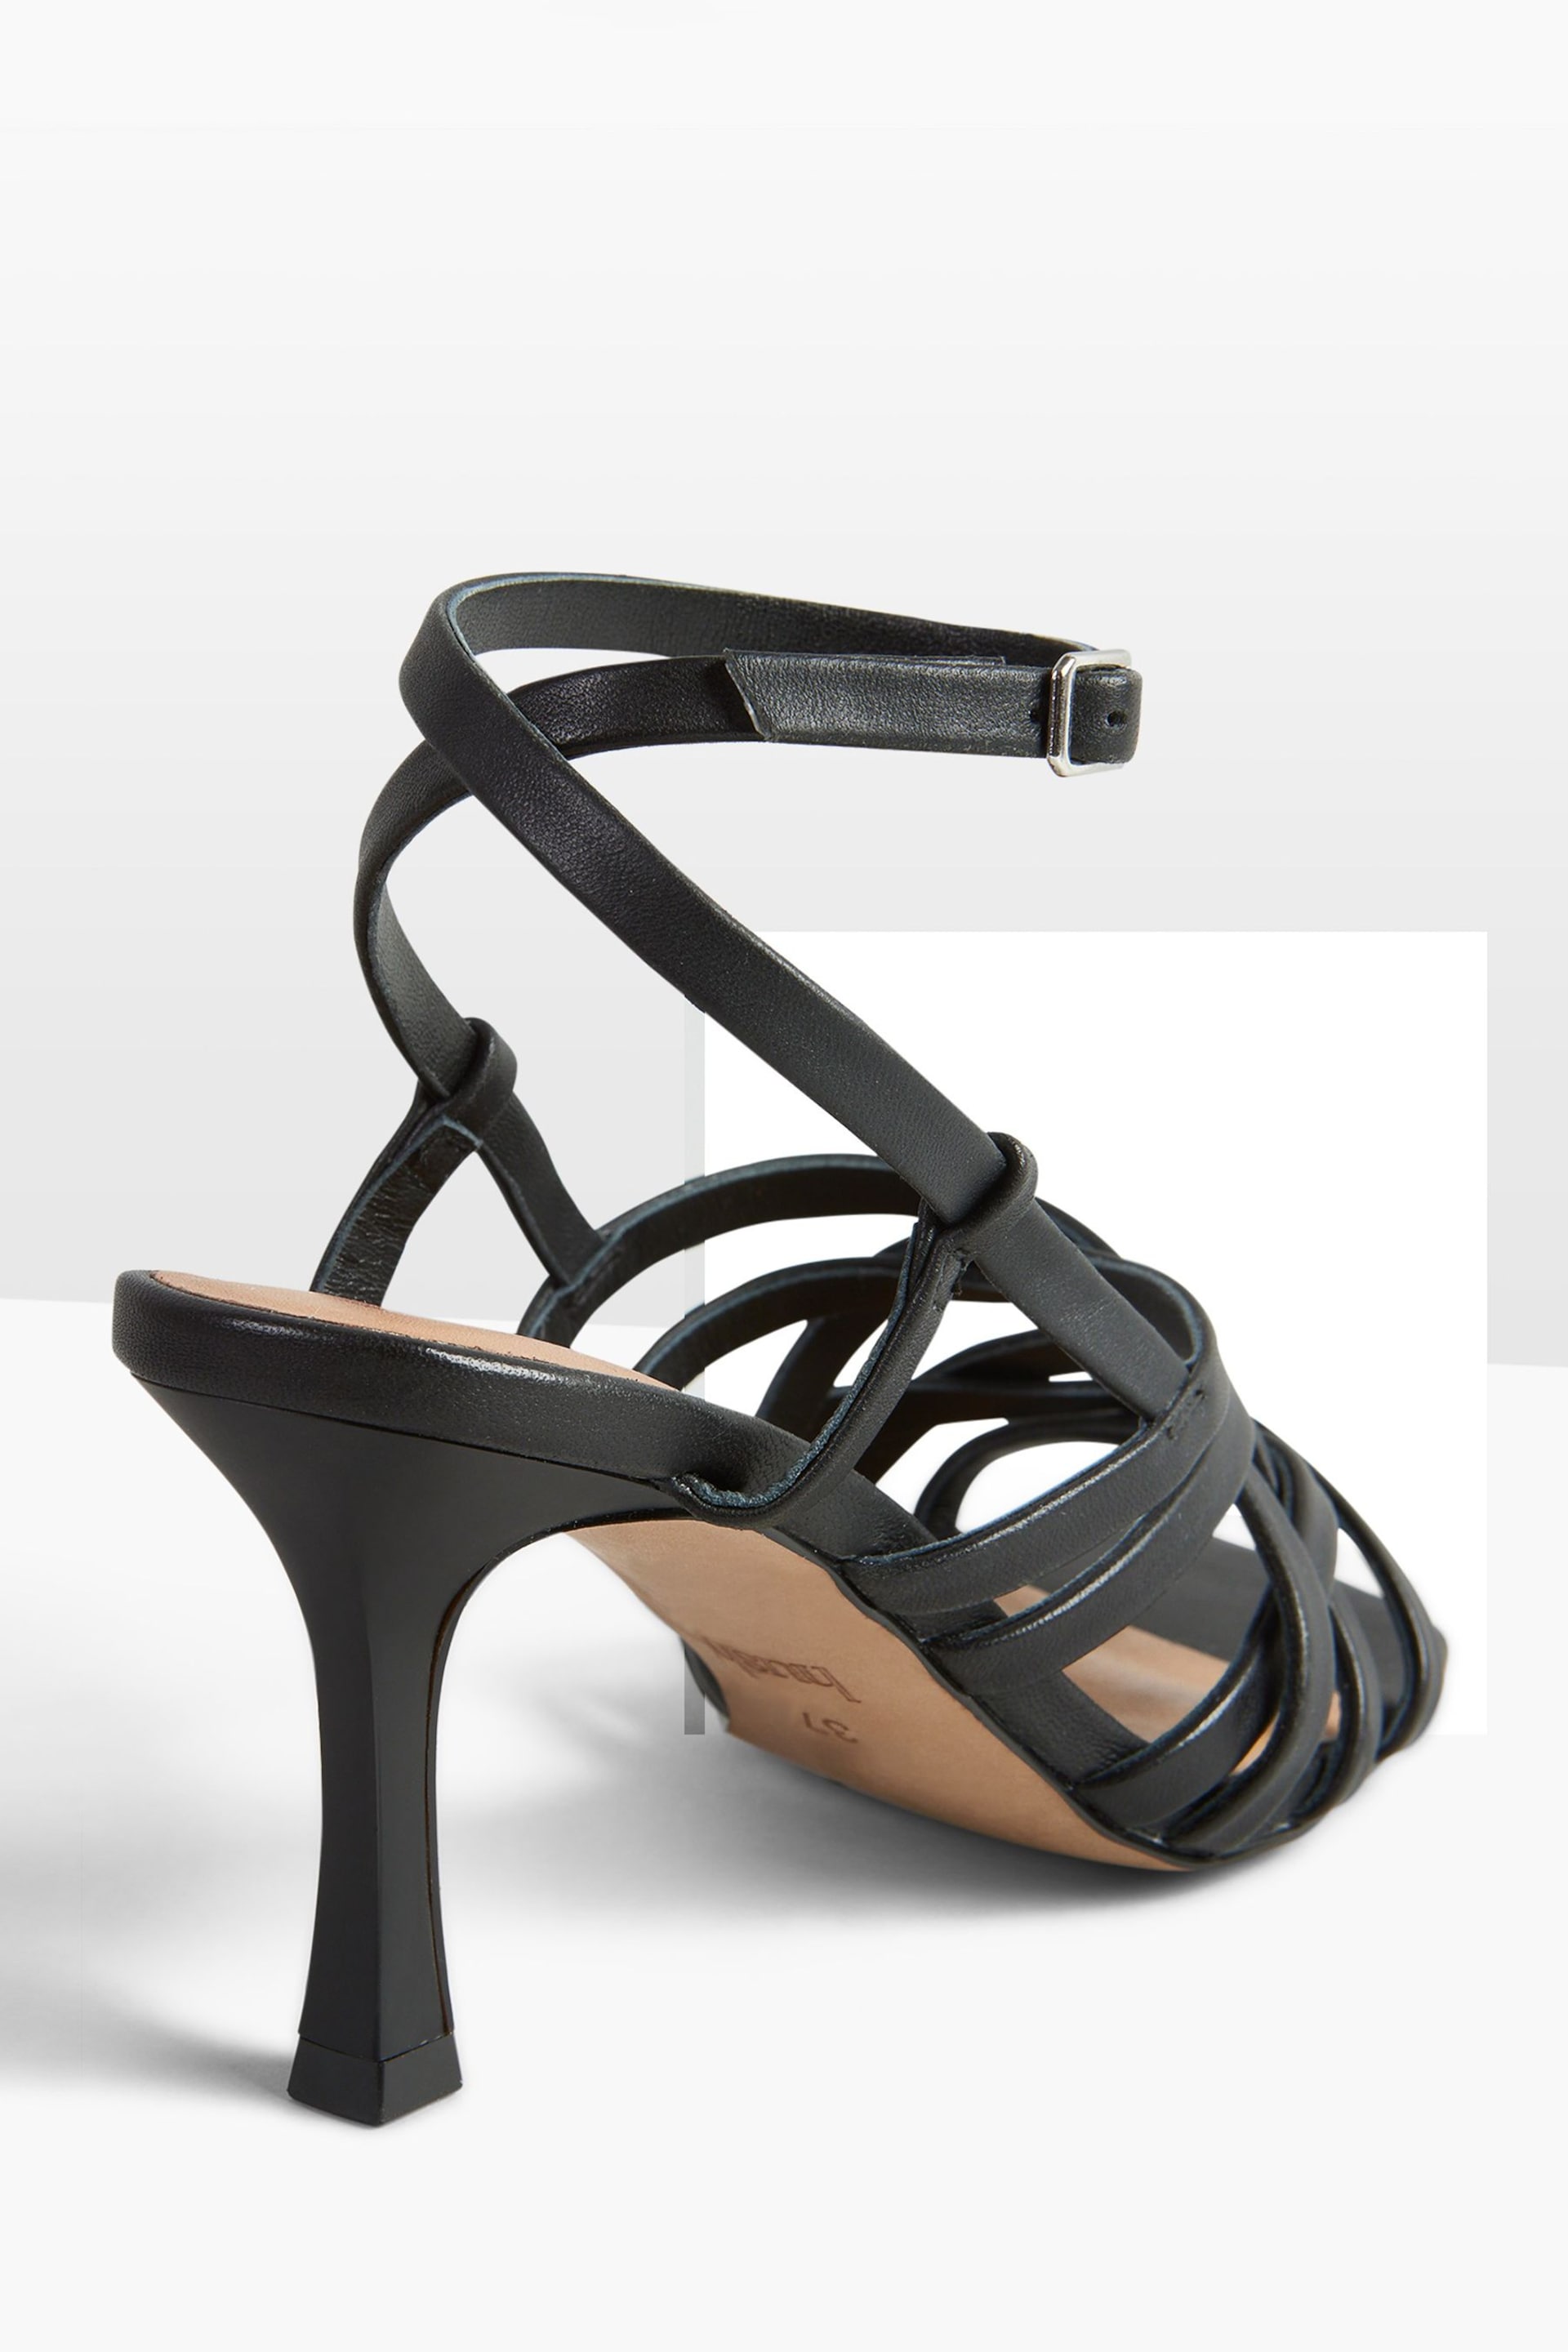 Hush Black Gisele Strappy Leather Stiletto Shoes - Image 4 of 4